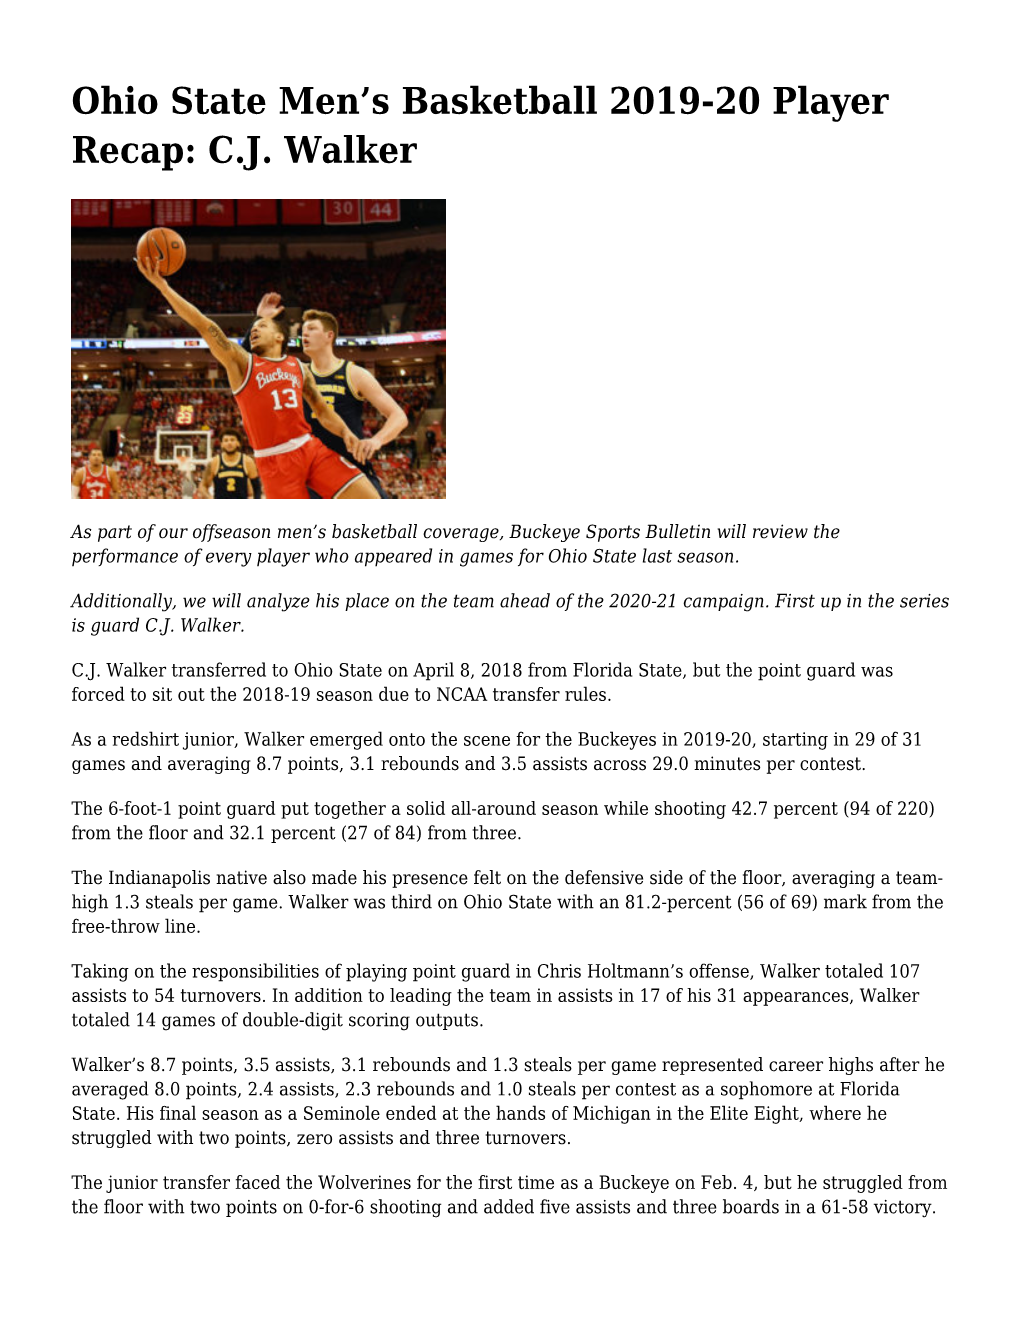 Ohio State Men's Basketball 2019-20 Player Recap: C.J. Walker